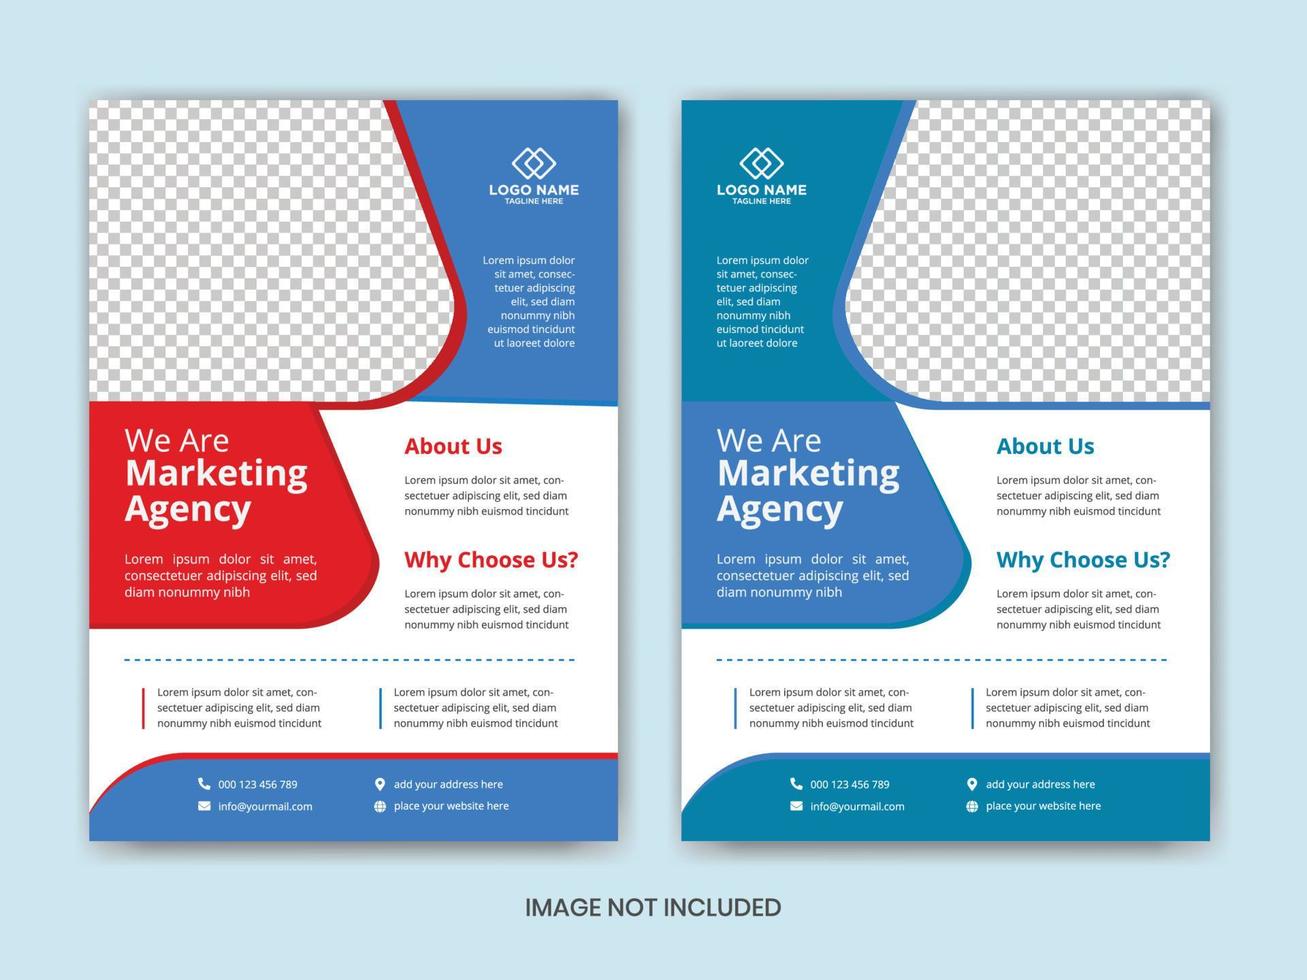 Digital marketing agency flyer design template vector